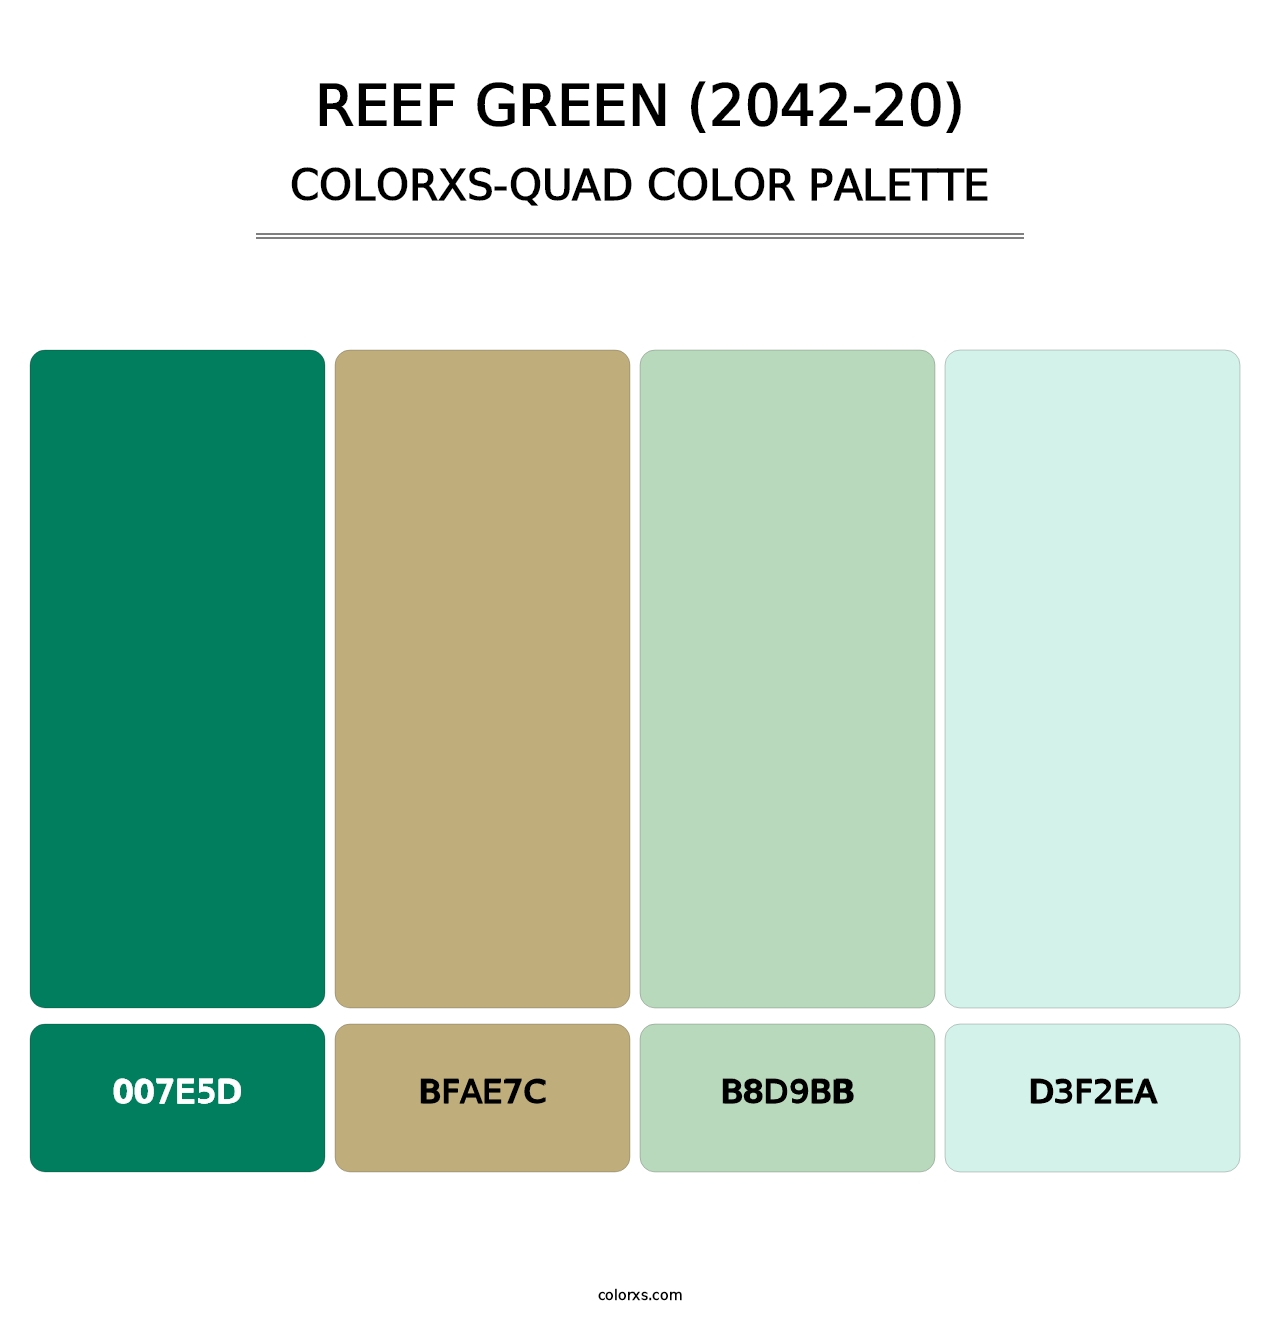 Reef Green (2042-20) - Colorxs Quad Palette